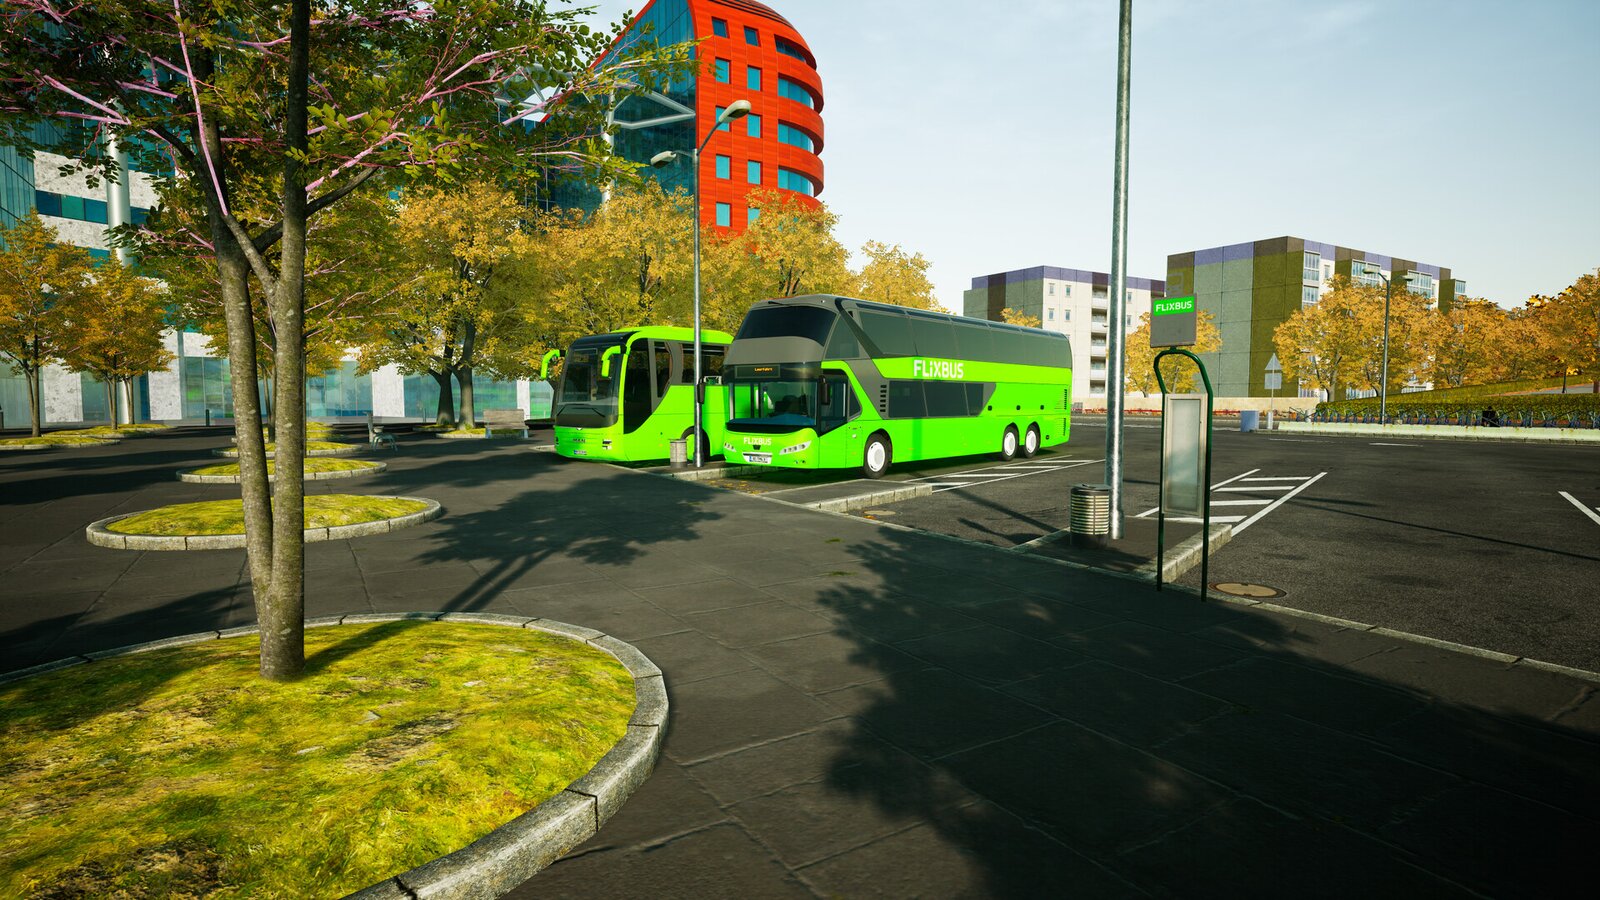 Fernbus Simulator Add-On - Neoplan Skyliner